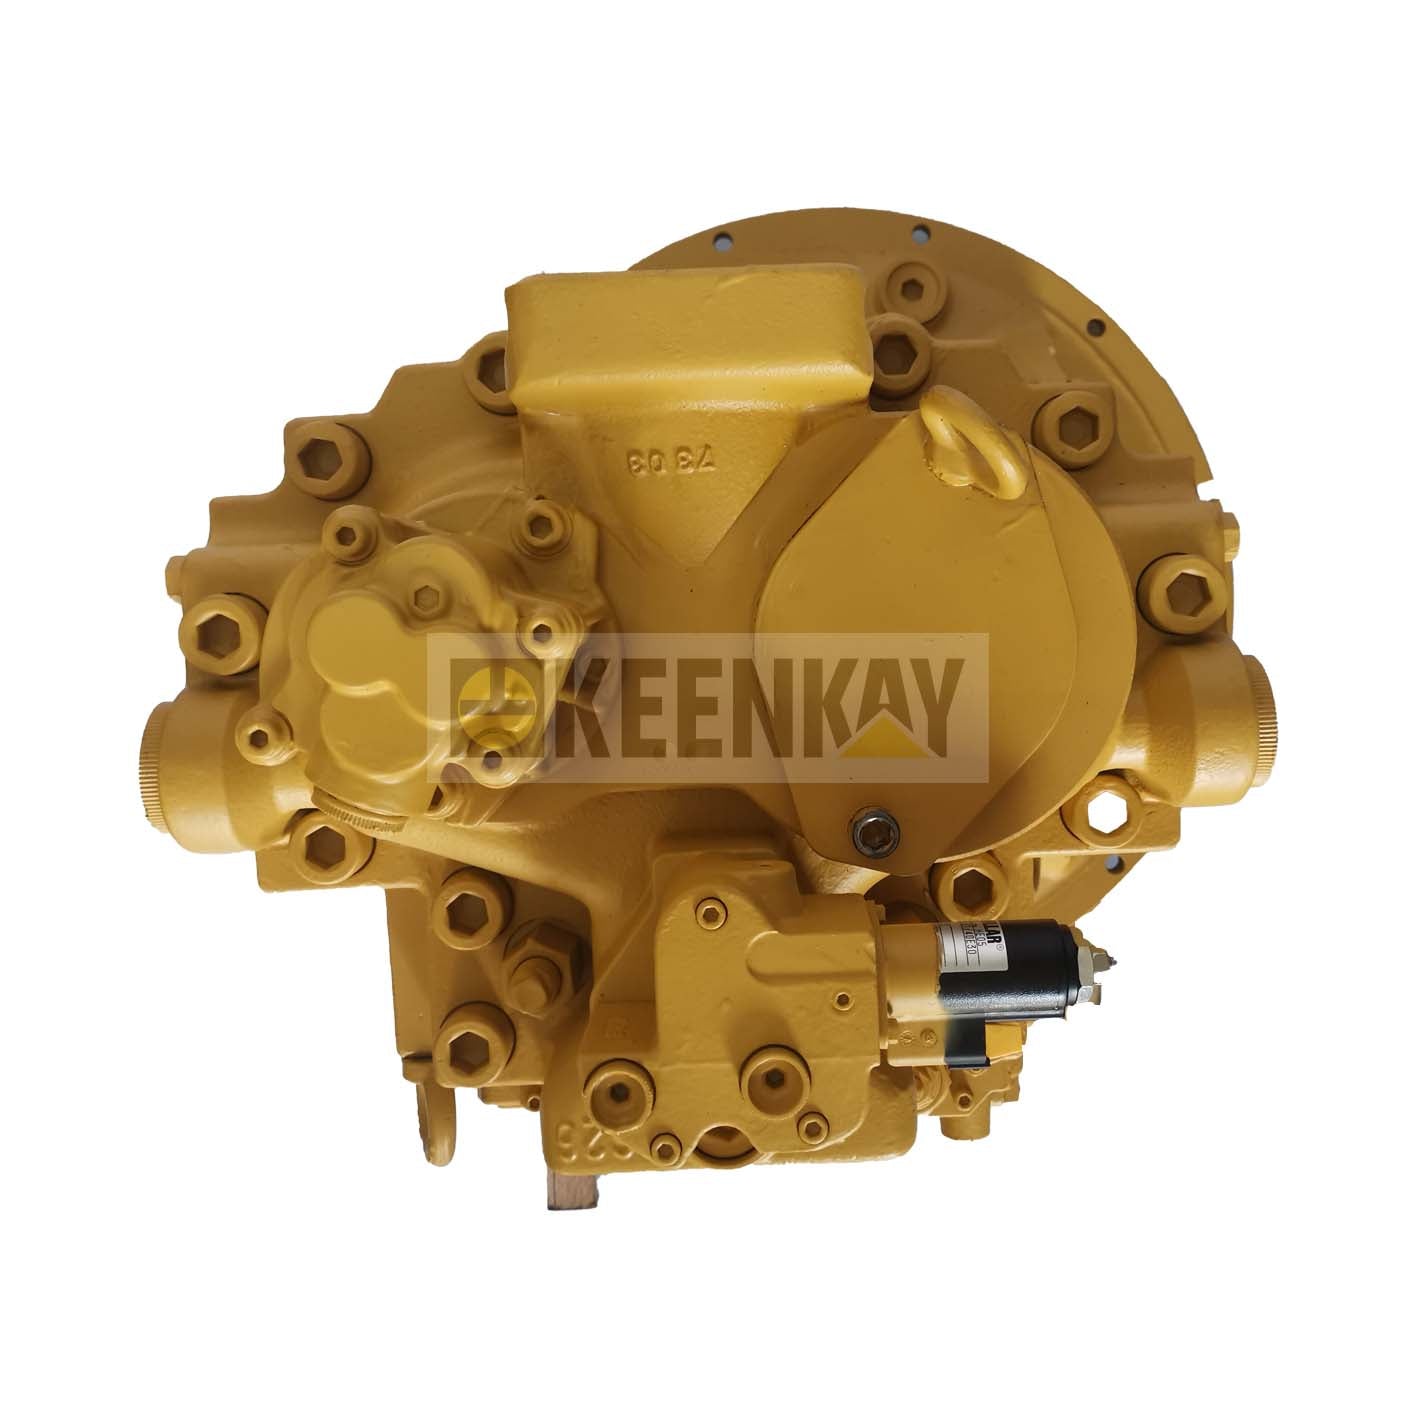 keenkay 469-4091 504-5477  K5V160 Original Rebuilt Hydraulic Pump for CAT336D2 Excavator